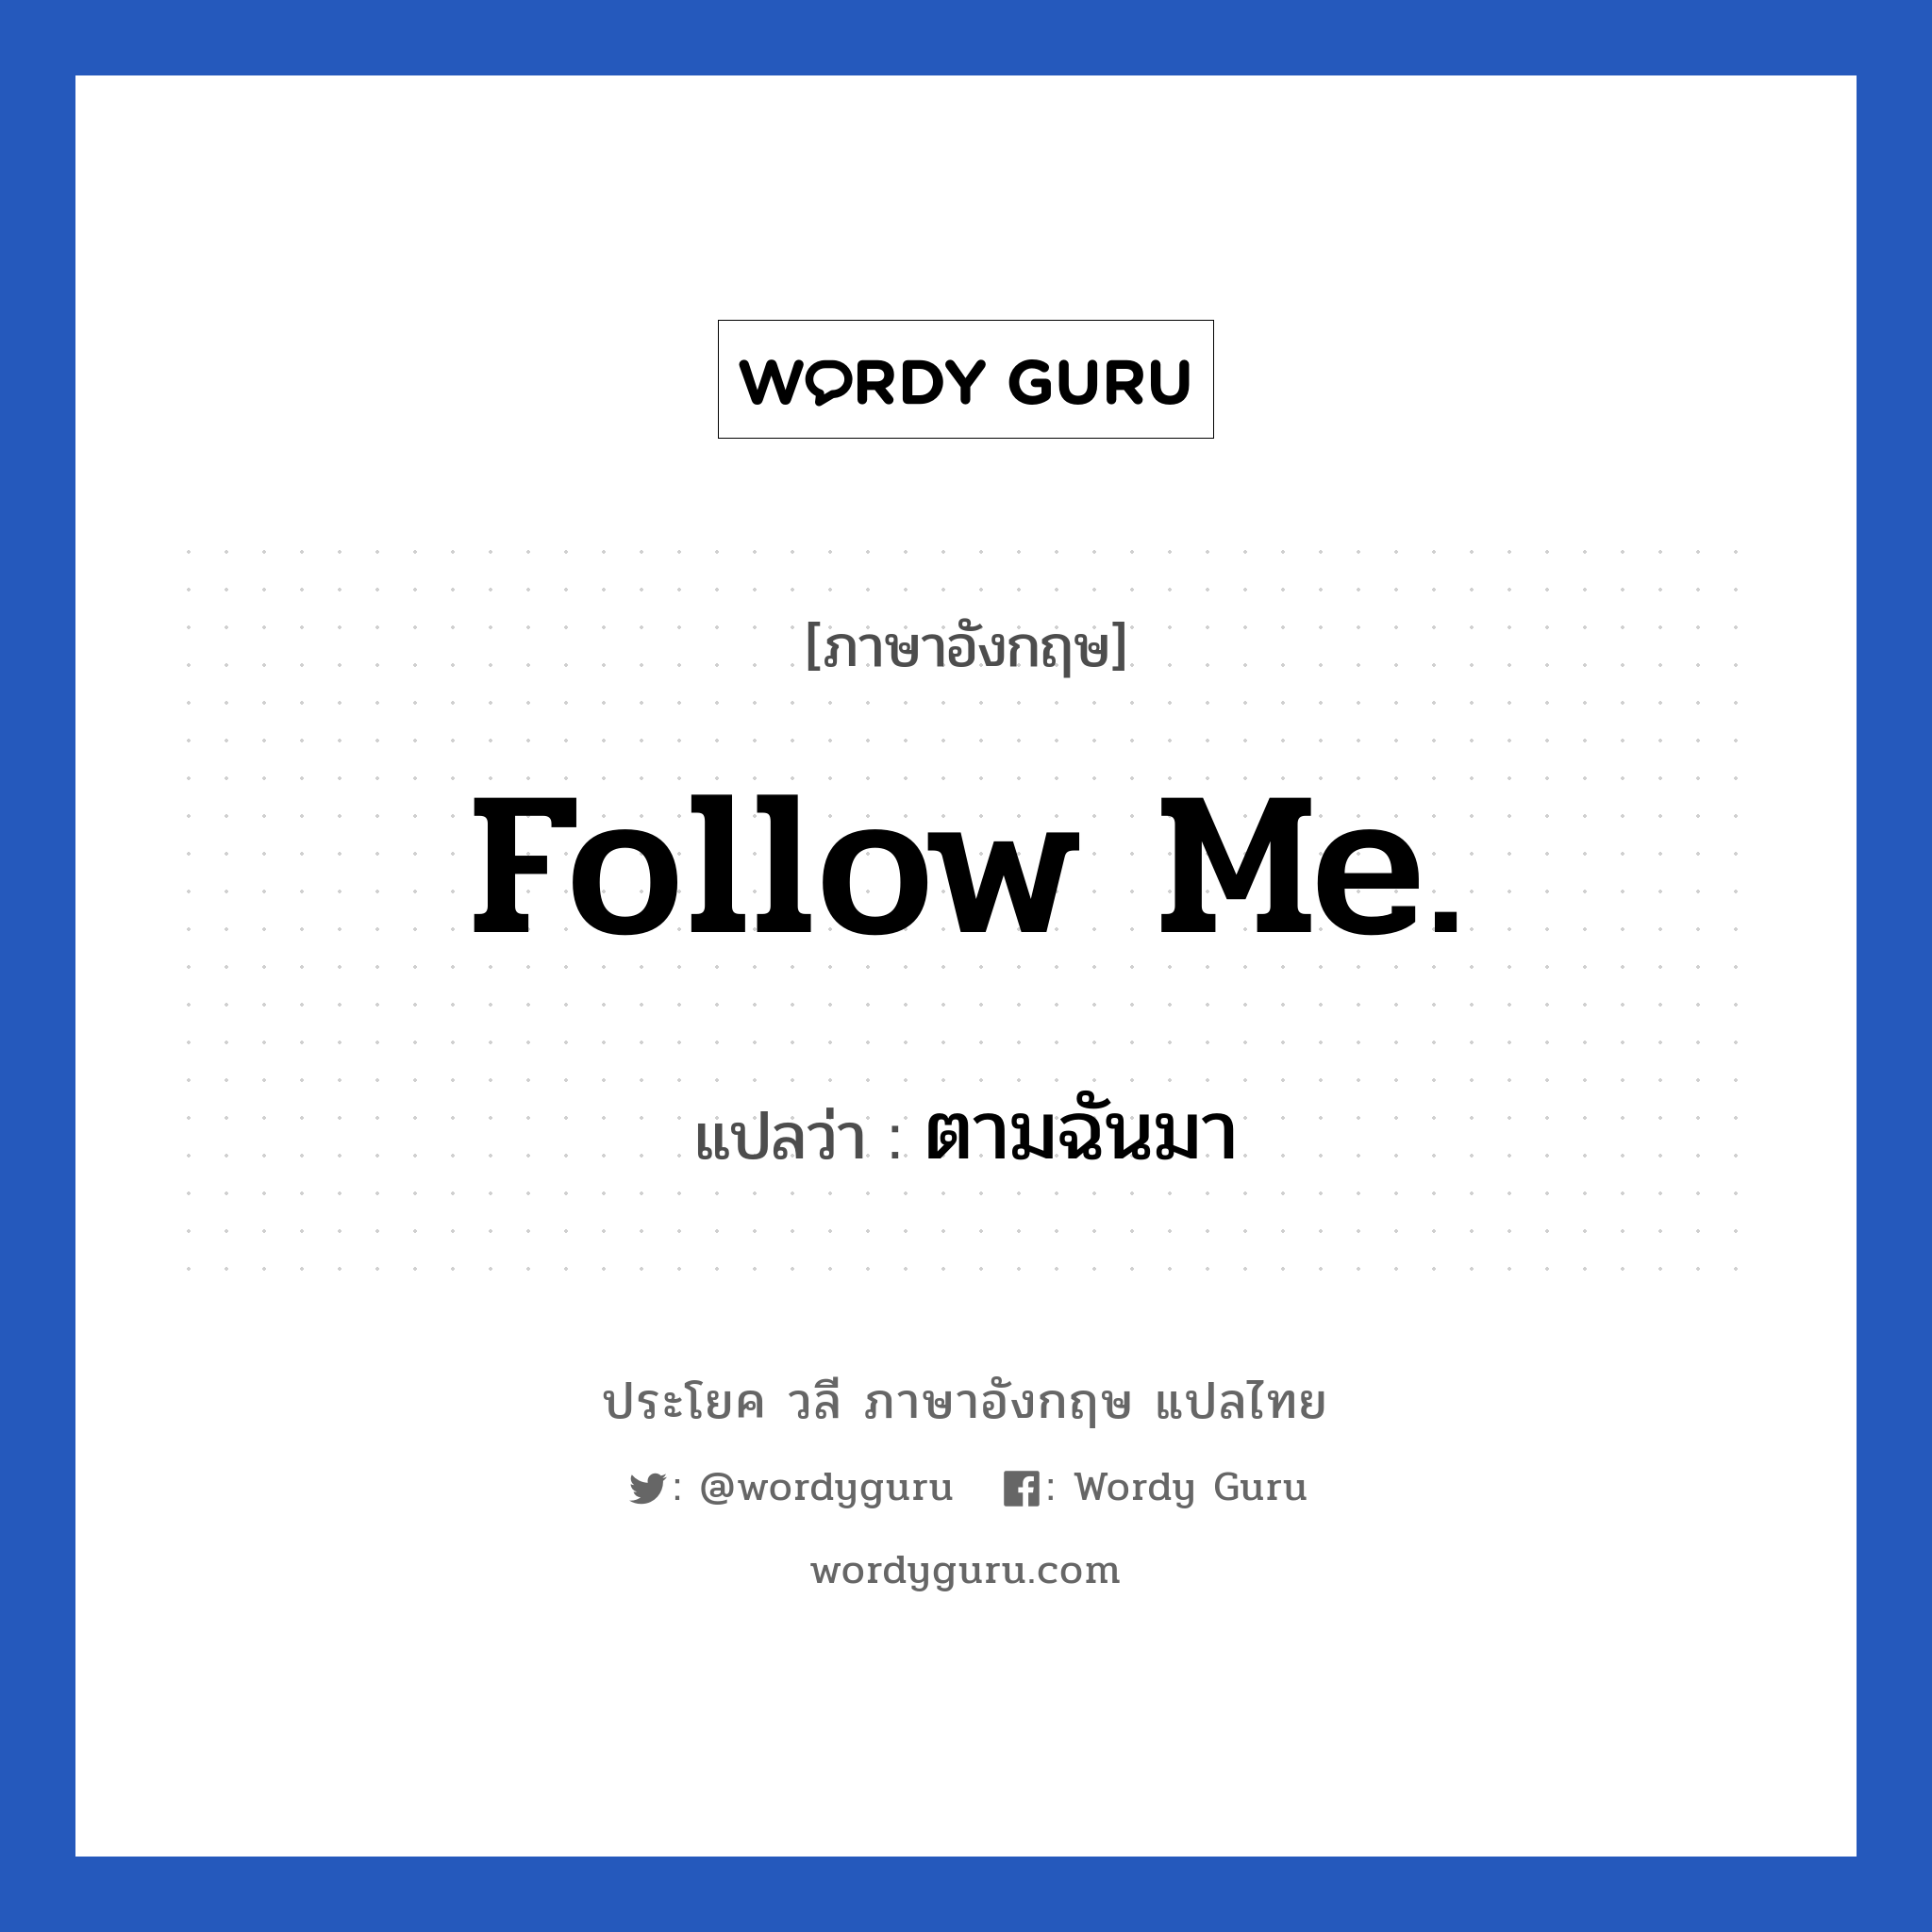 Follow me. แปลว่า?, วลีภาษาอังกฤษ Follow me. แปลว่า ตามฉันมา